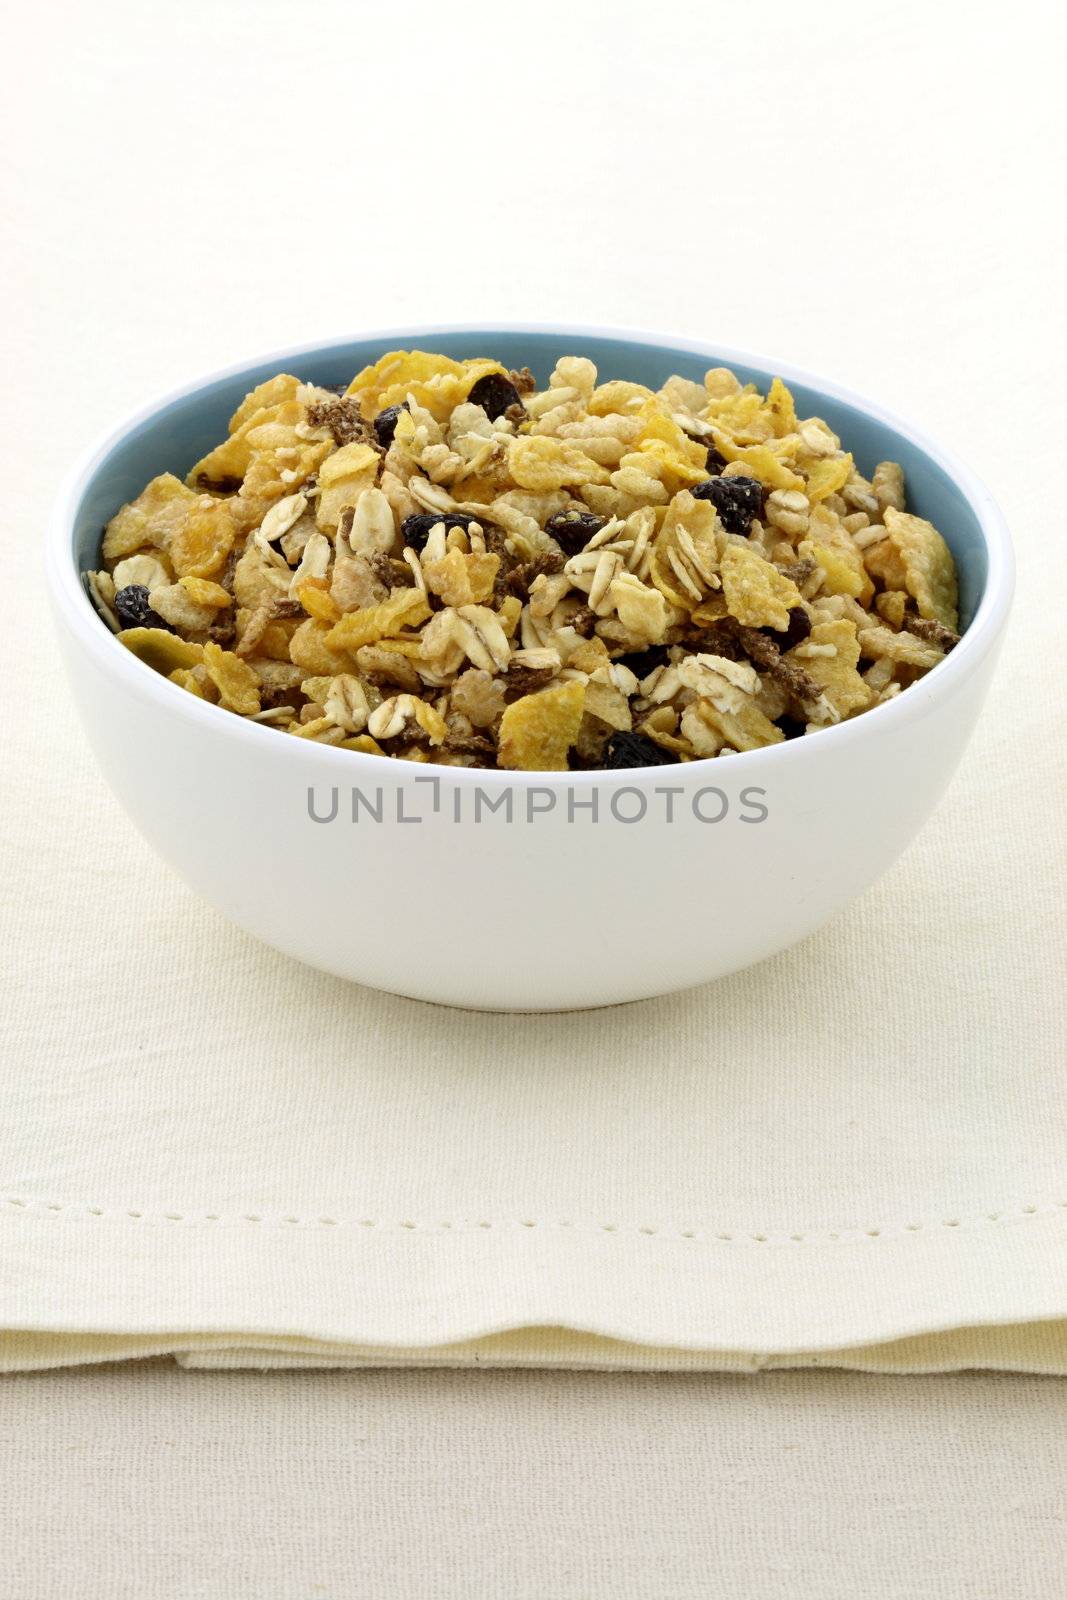 delicious and healthy granola by tacar